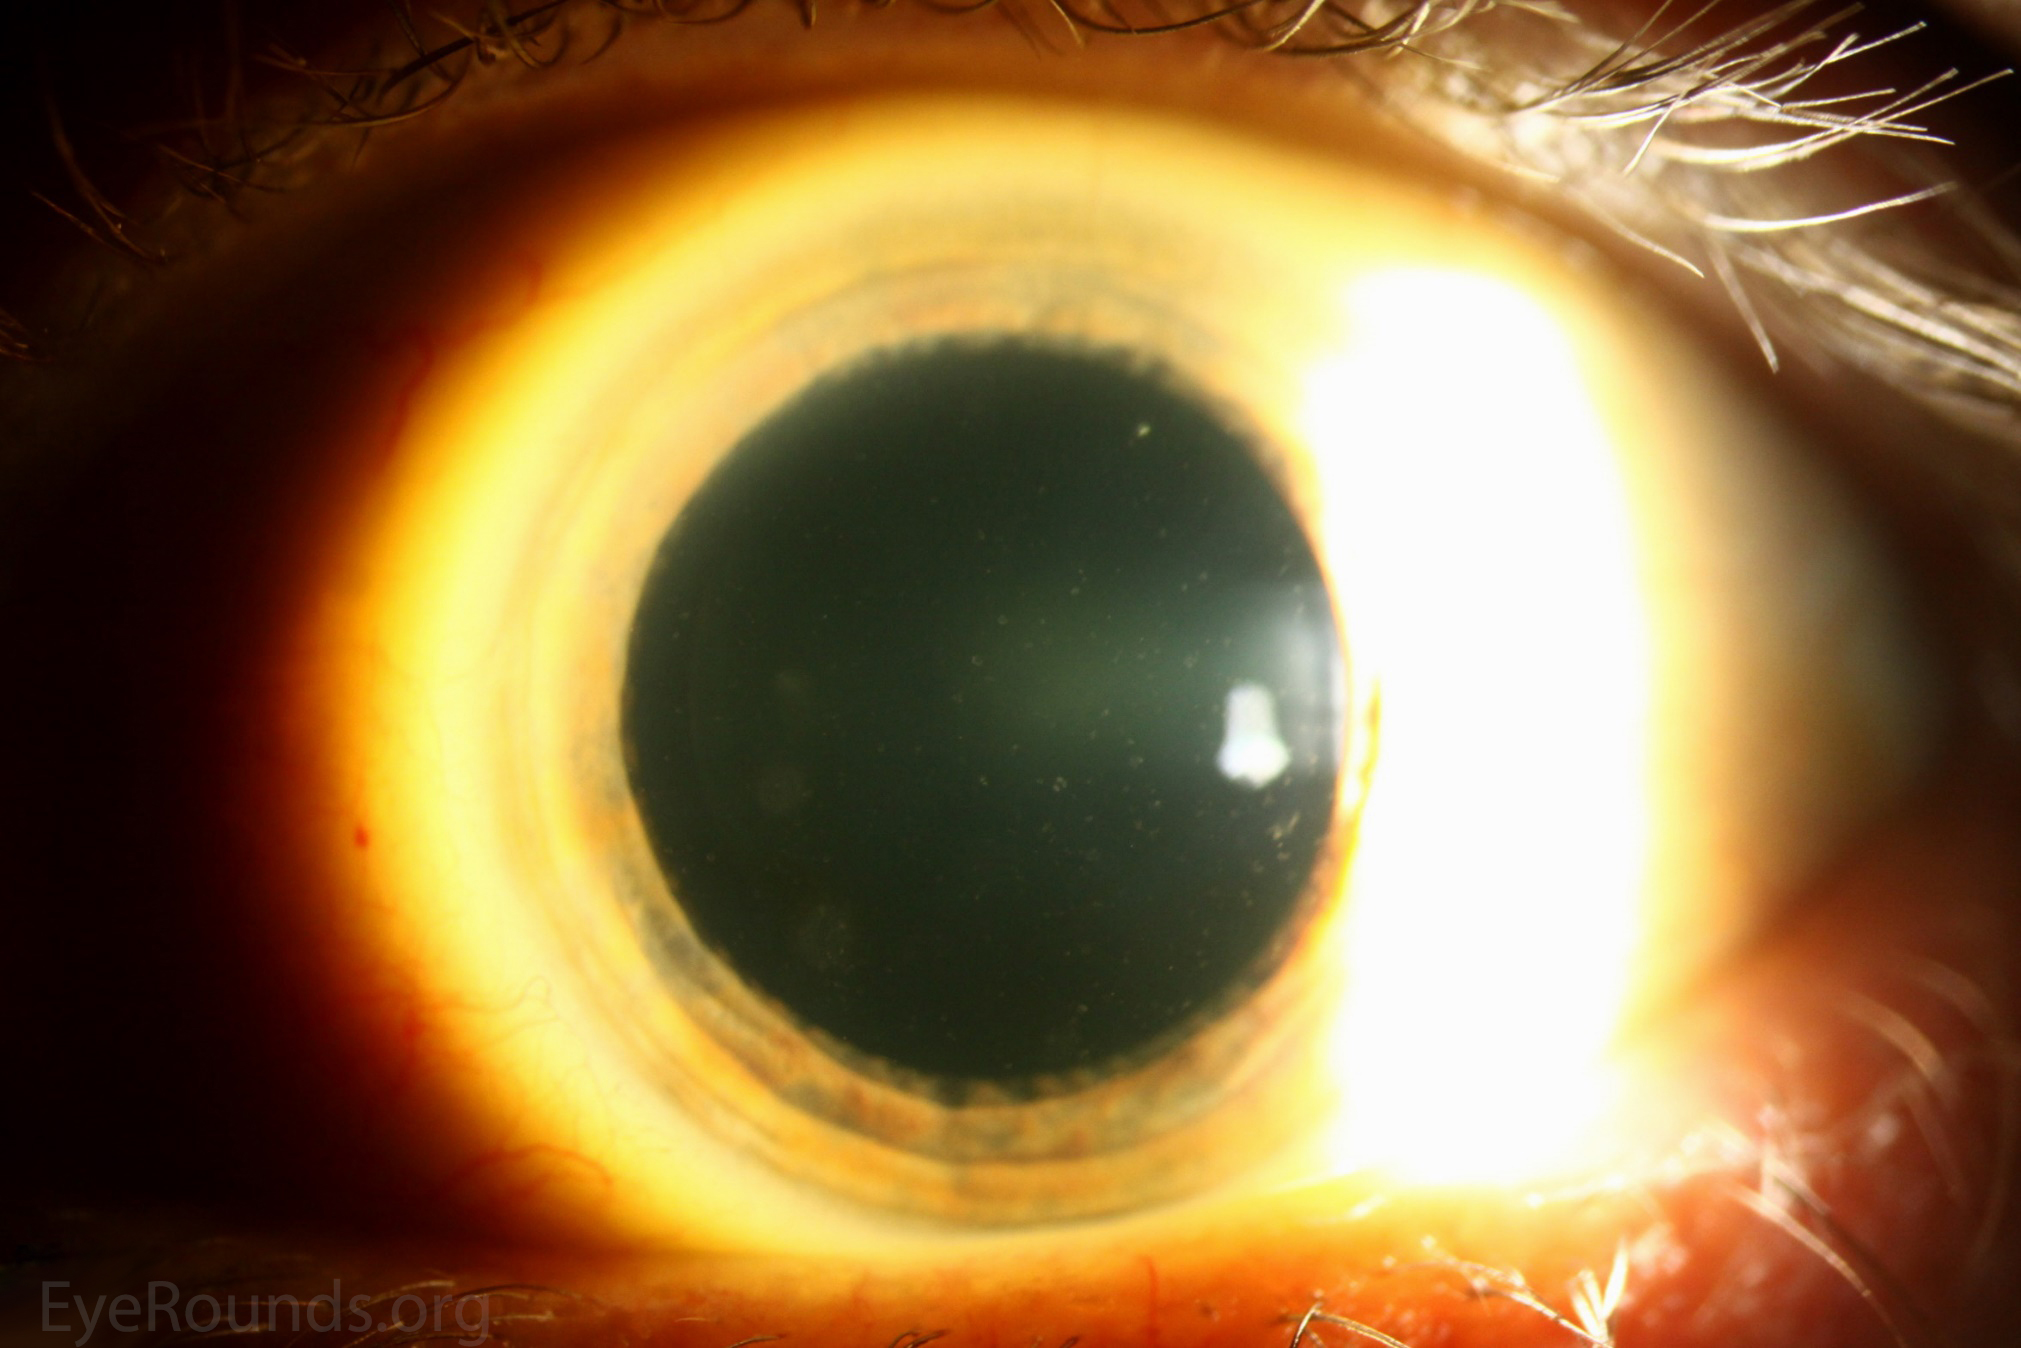 Fleck Corneal Dystrophy (a.k.a. Francois-Neetens speckled corneal dystrophy2021 x 1348